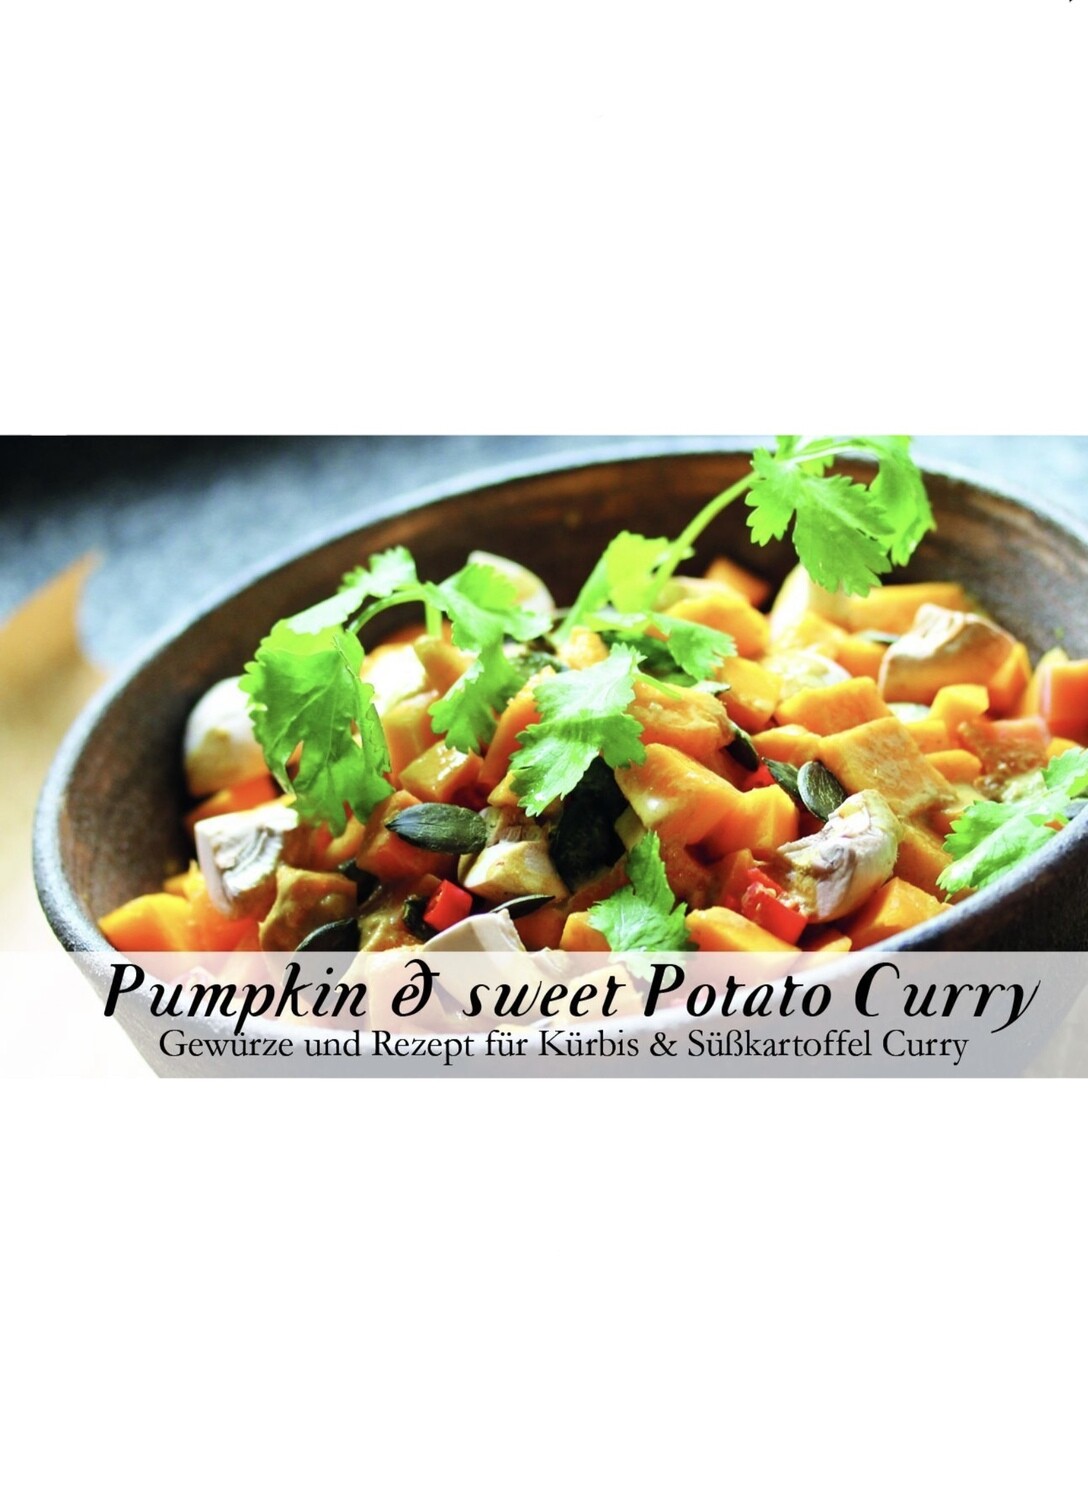 Pumpkin & Sweet Potato Curry Gewürzkasten (vegetarisch)